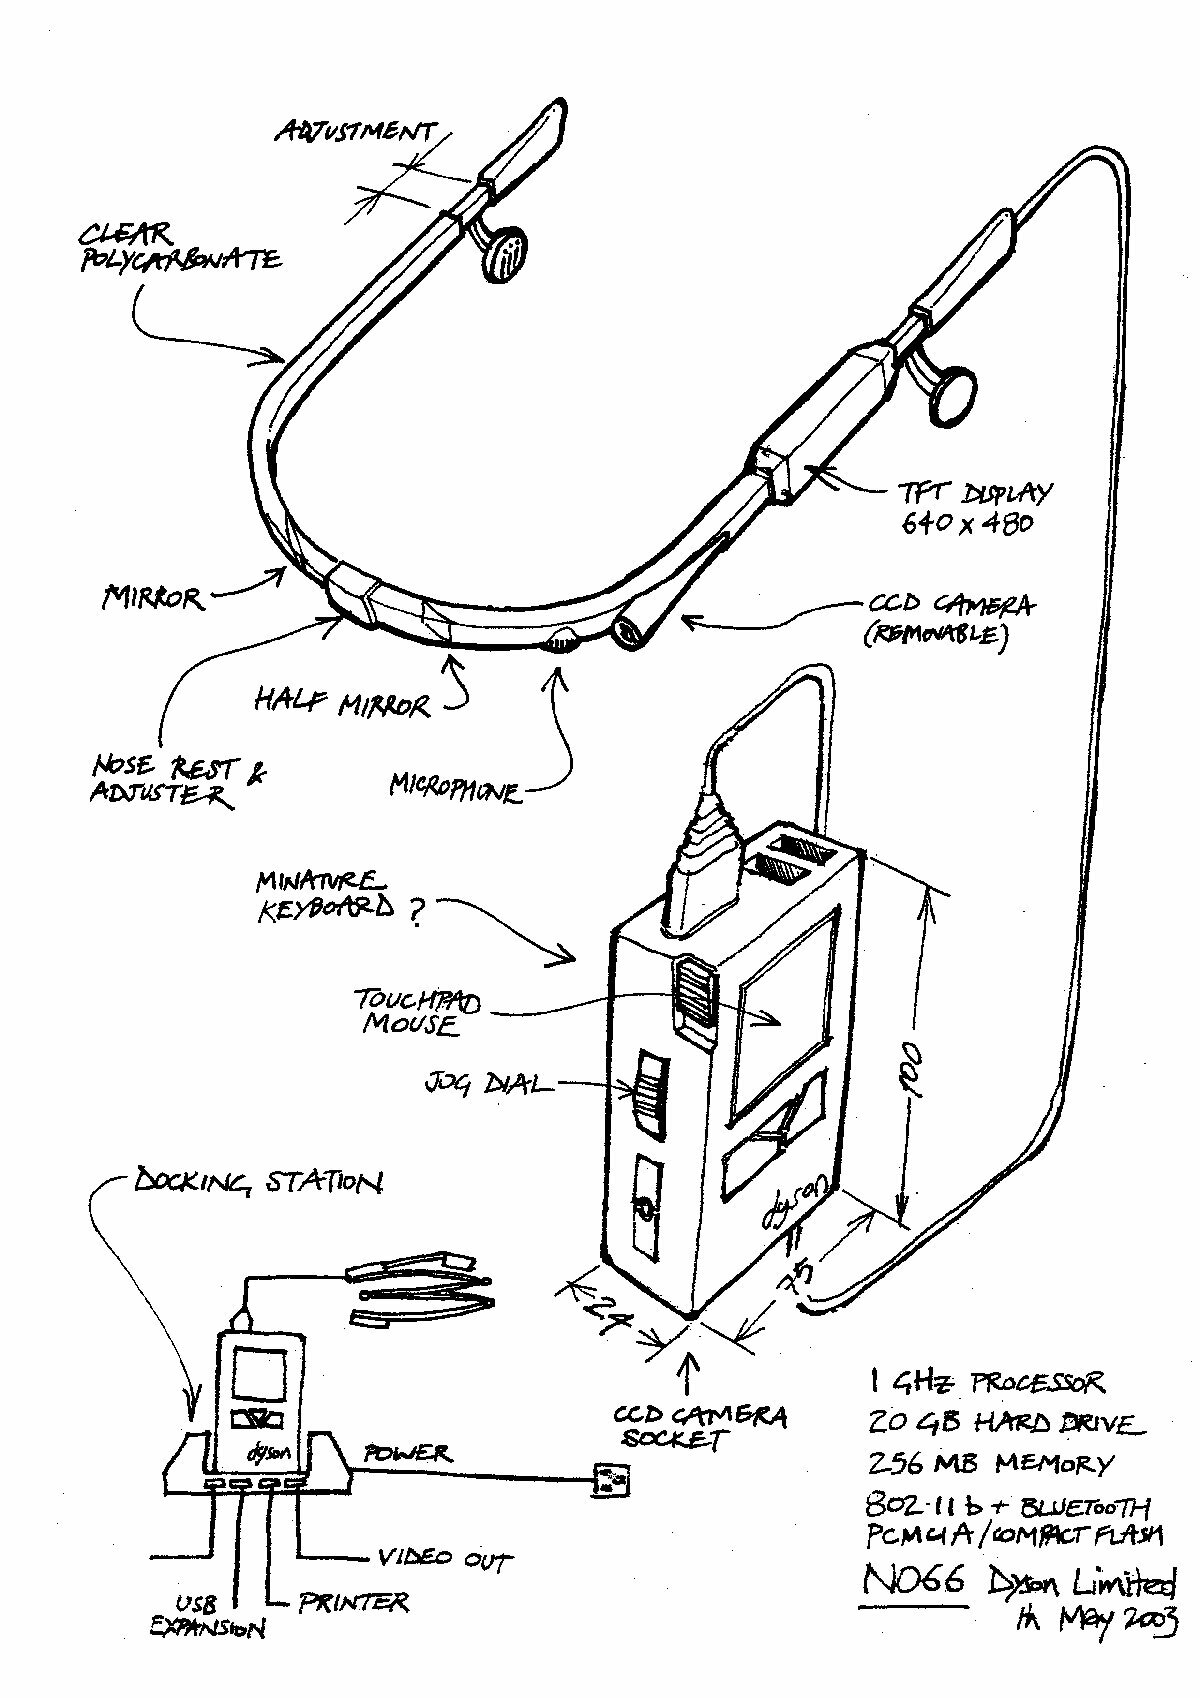 A 2003 sketch showing Dyson